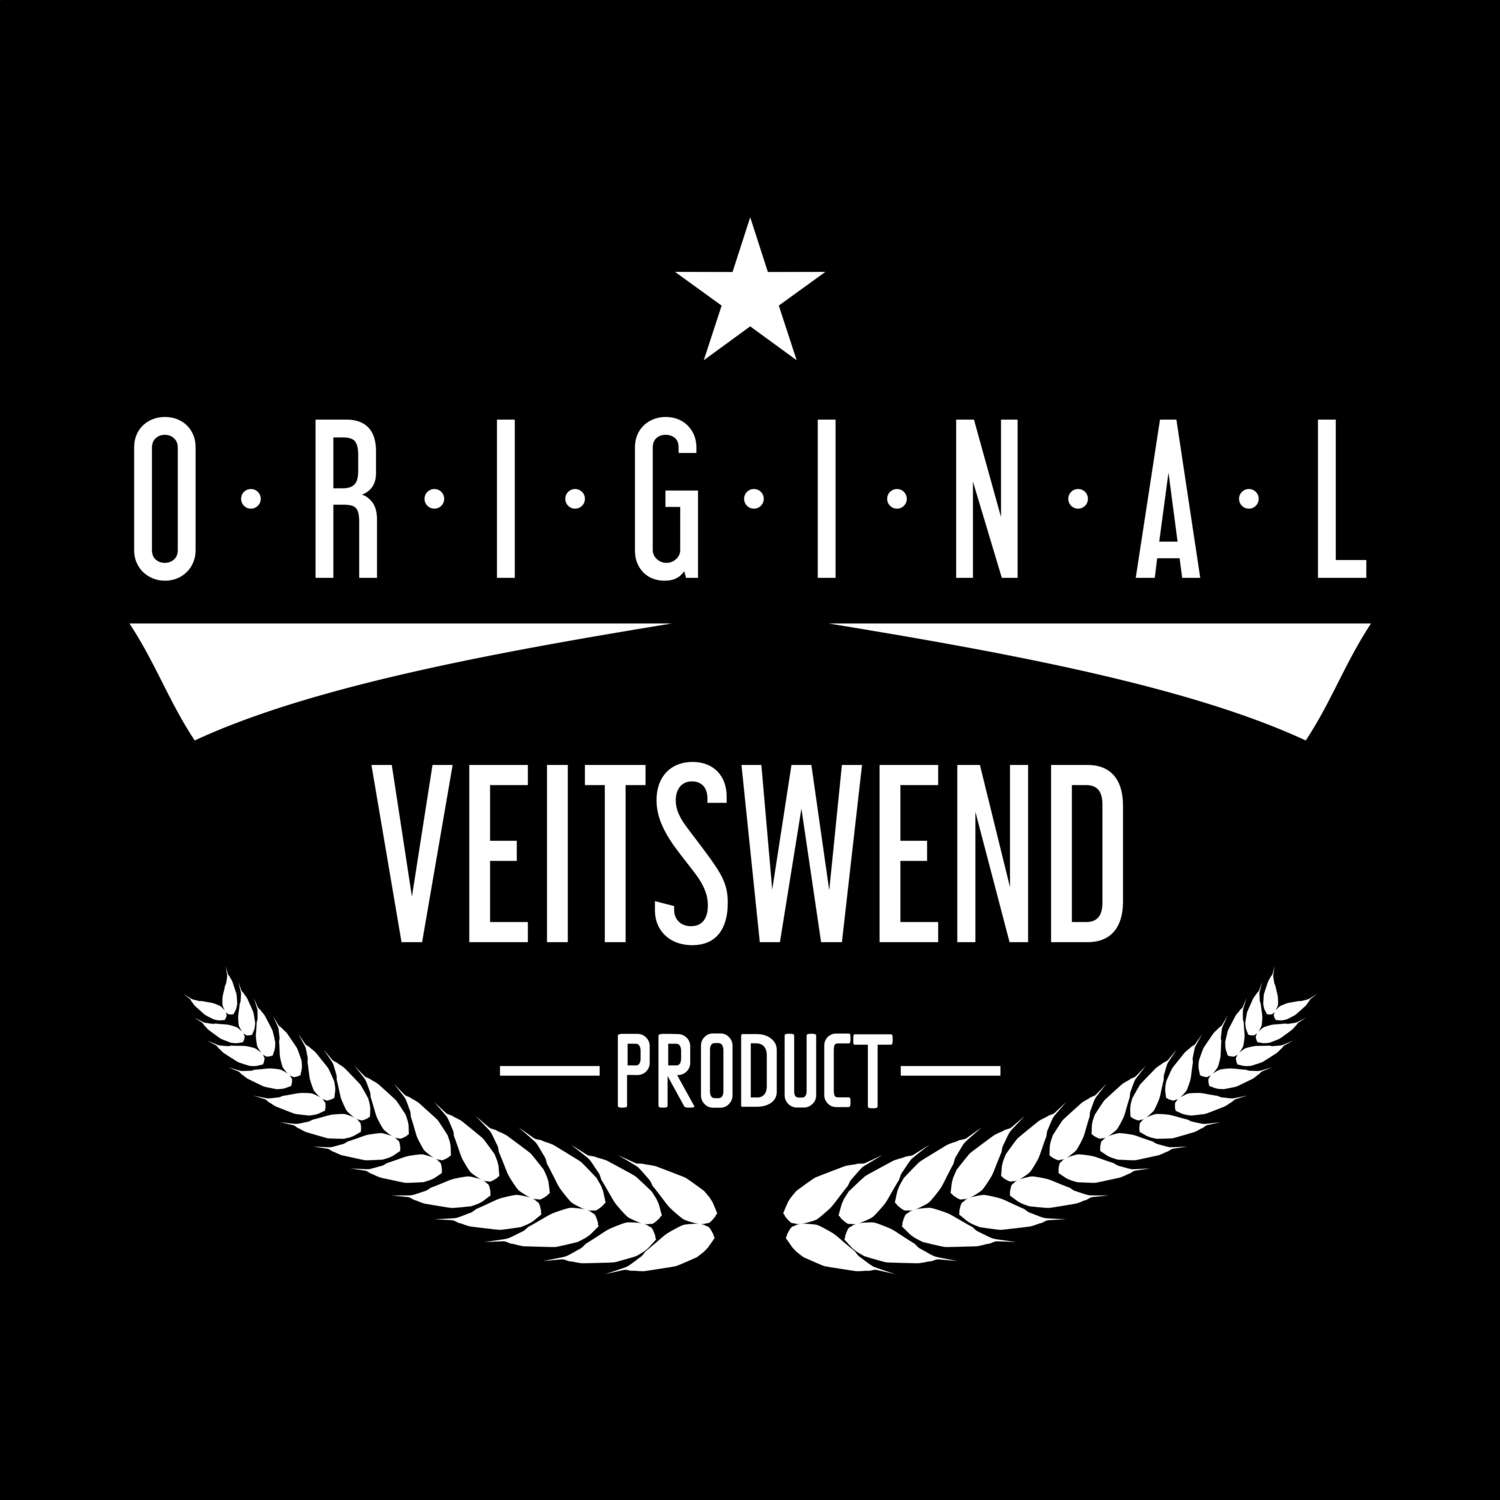 Veitswend T-Shirt »Original Product«